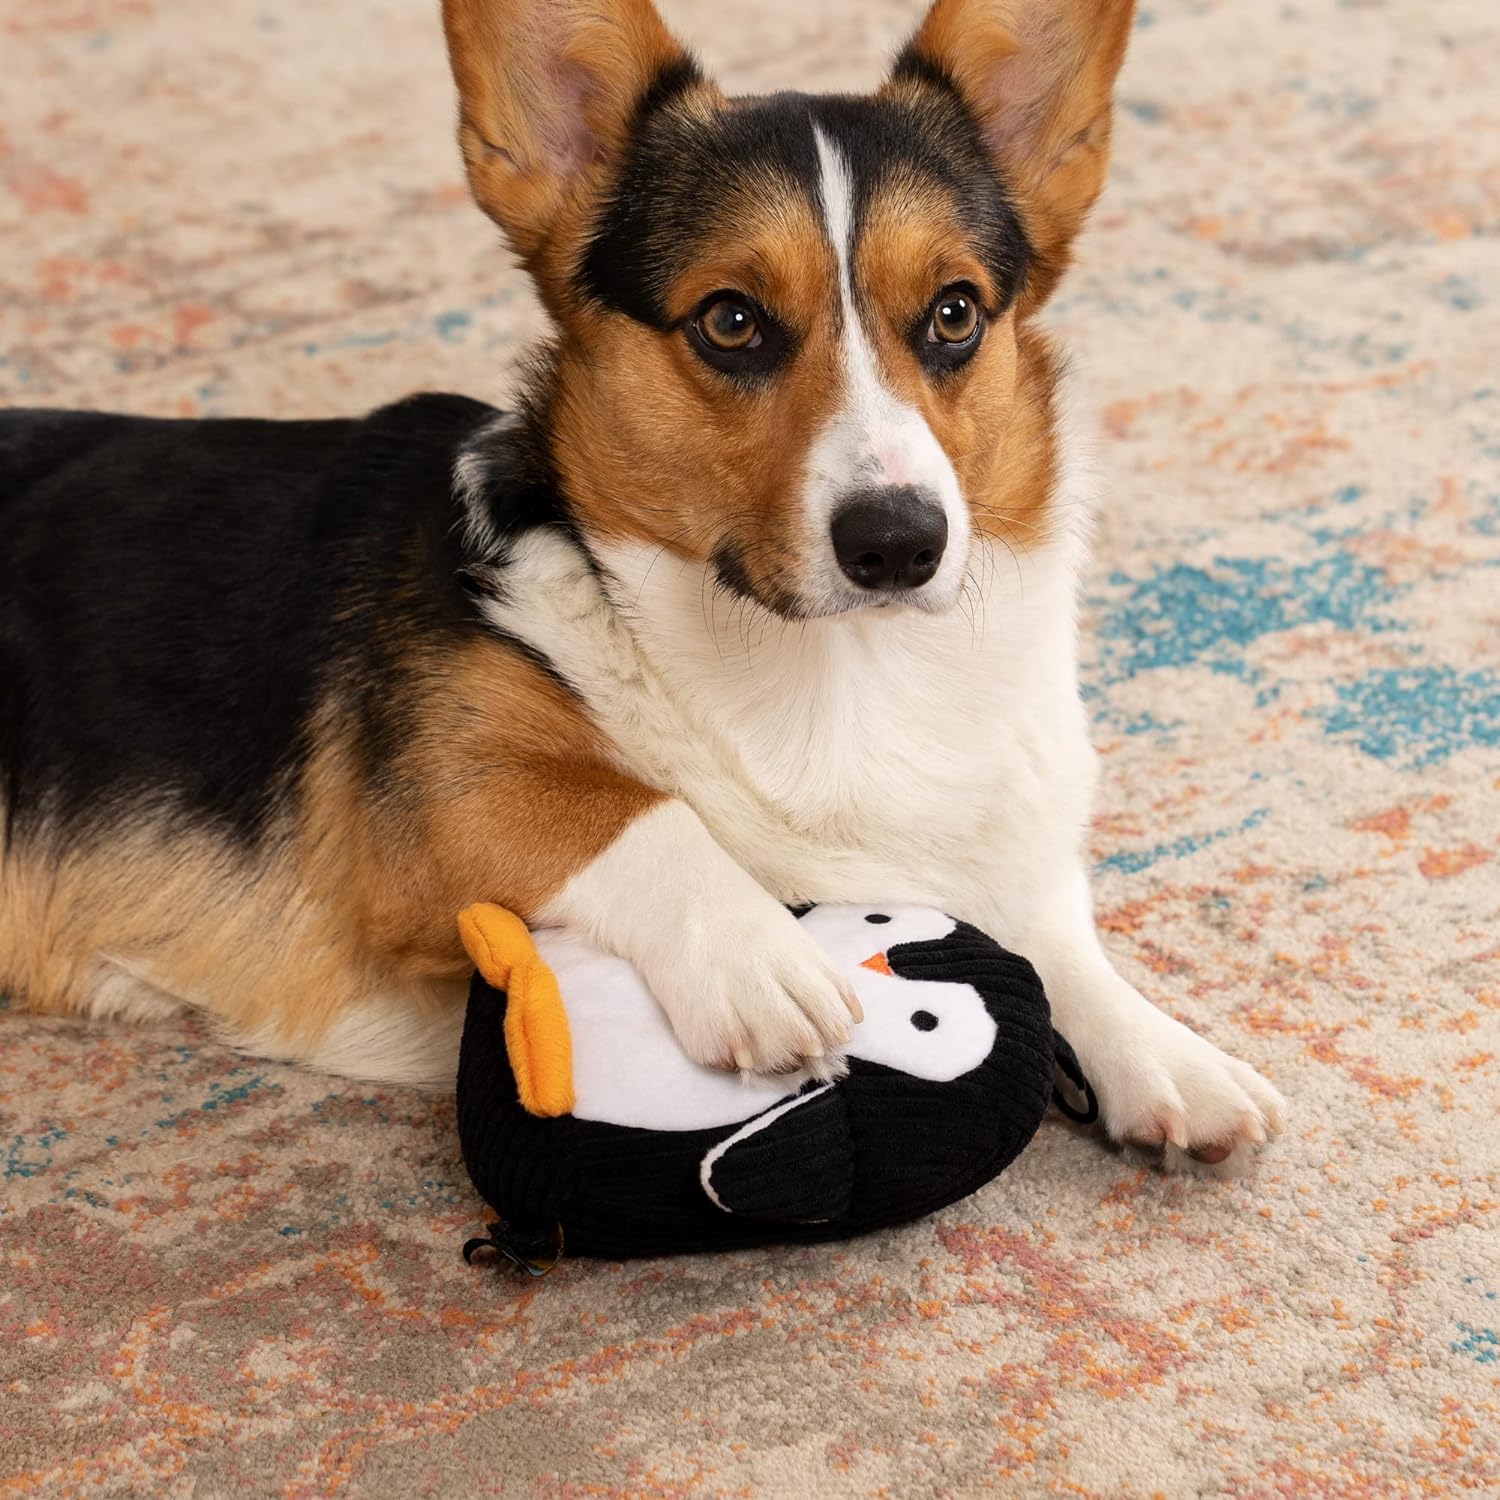 Trustypup Silent Squeak Penguin Dog Toy - Chew Guard Technology, Medium, Black/White